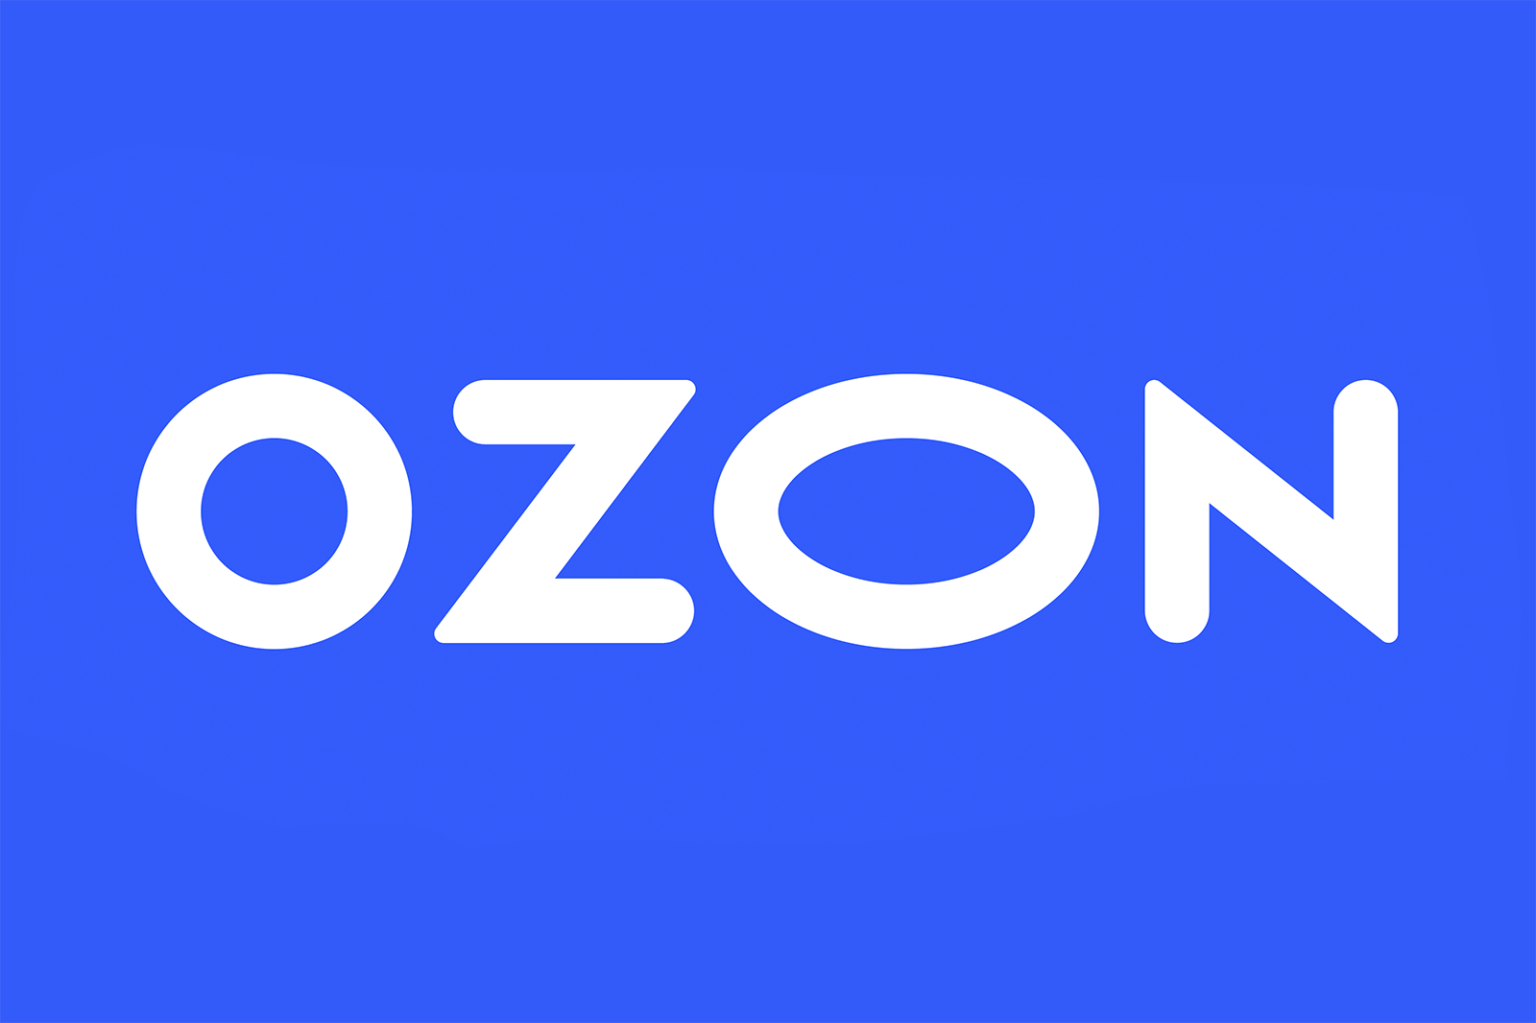 Озон интернет магазин москва. OZON логотип 2020. Озон логотип на прозрачном фоне. Oz логотип. Надпись Озон.